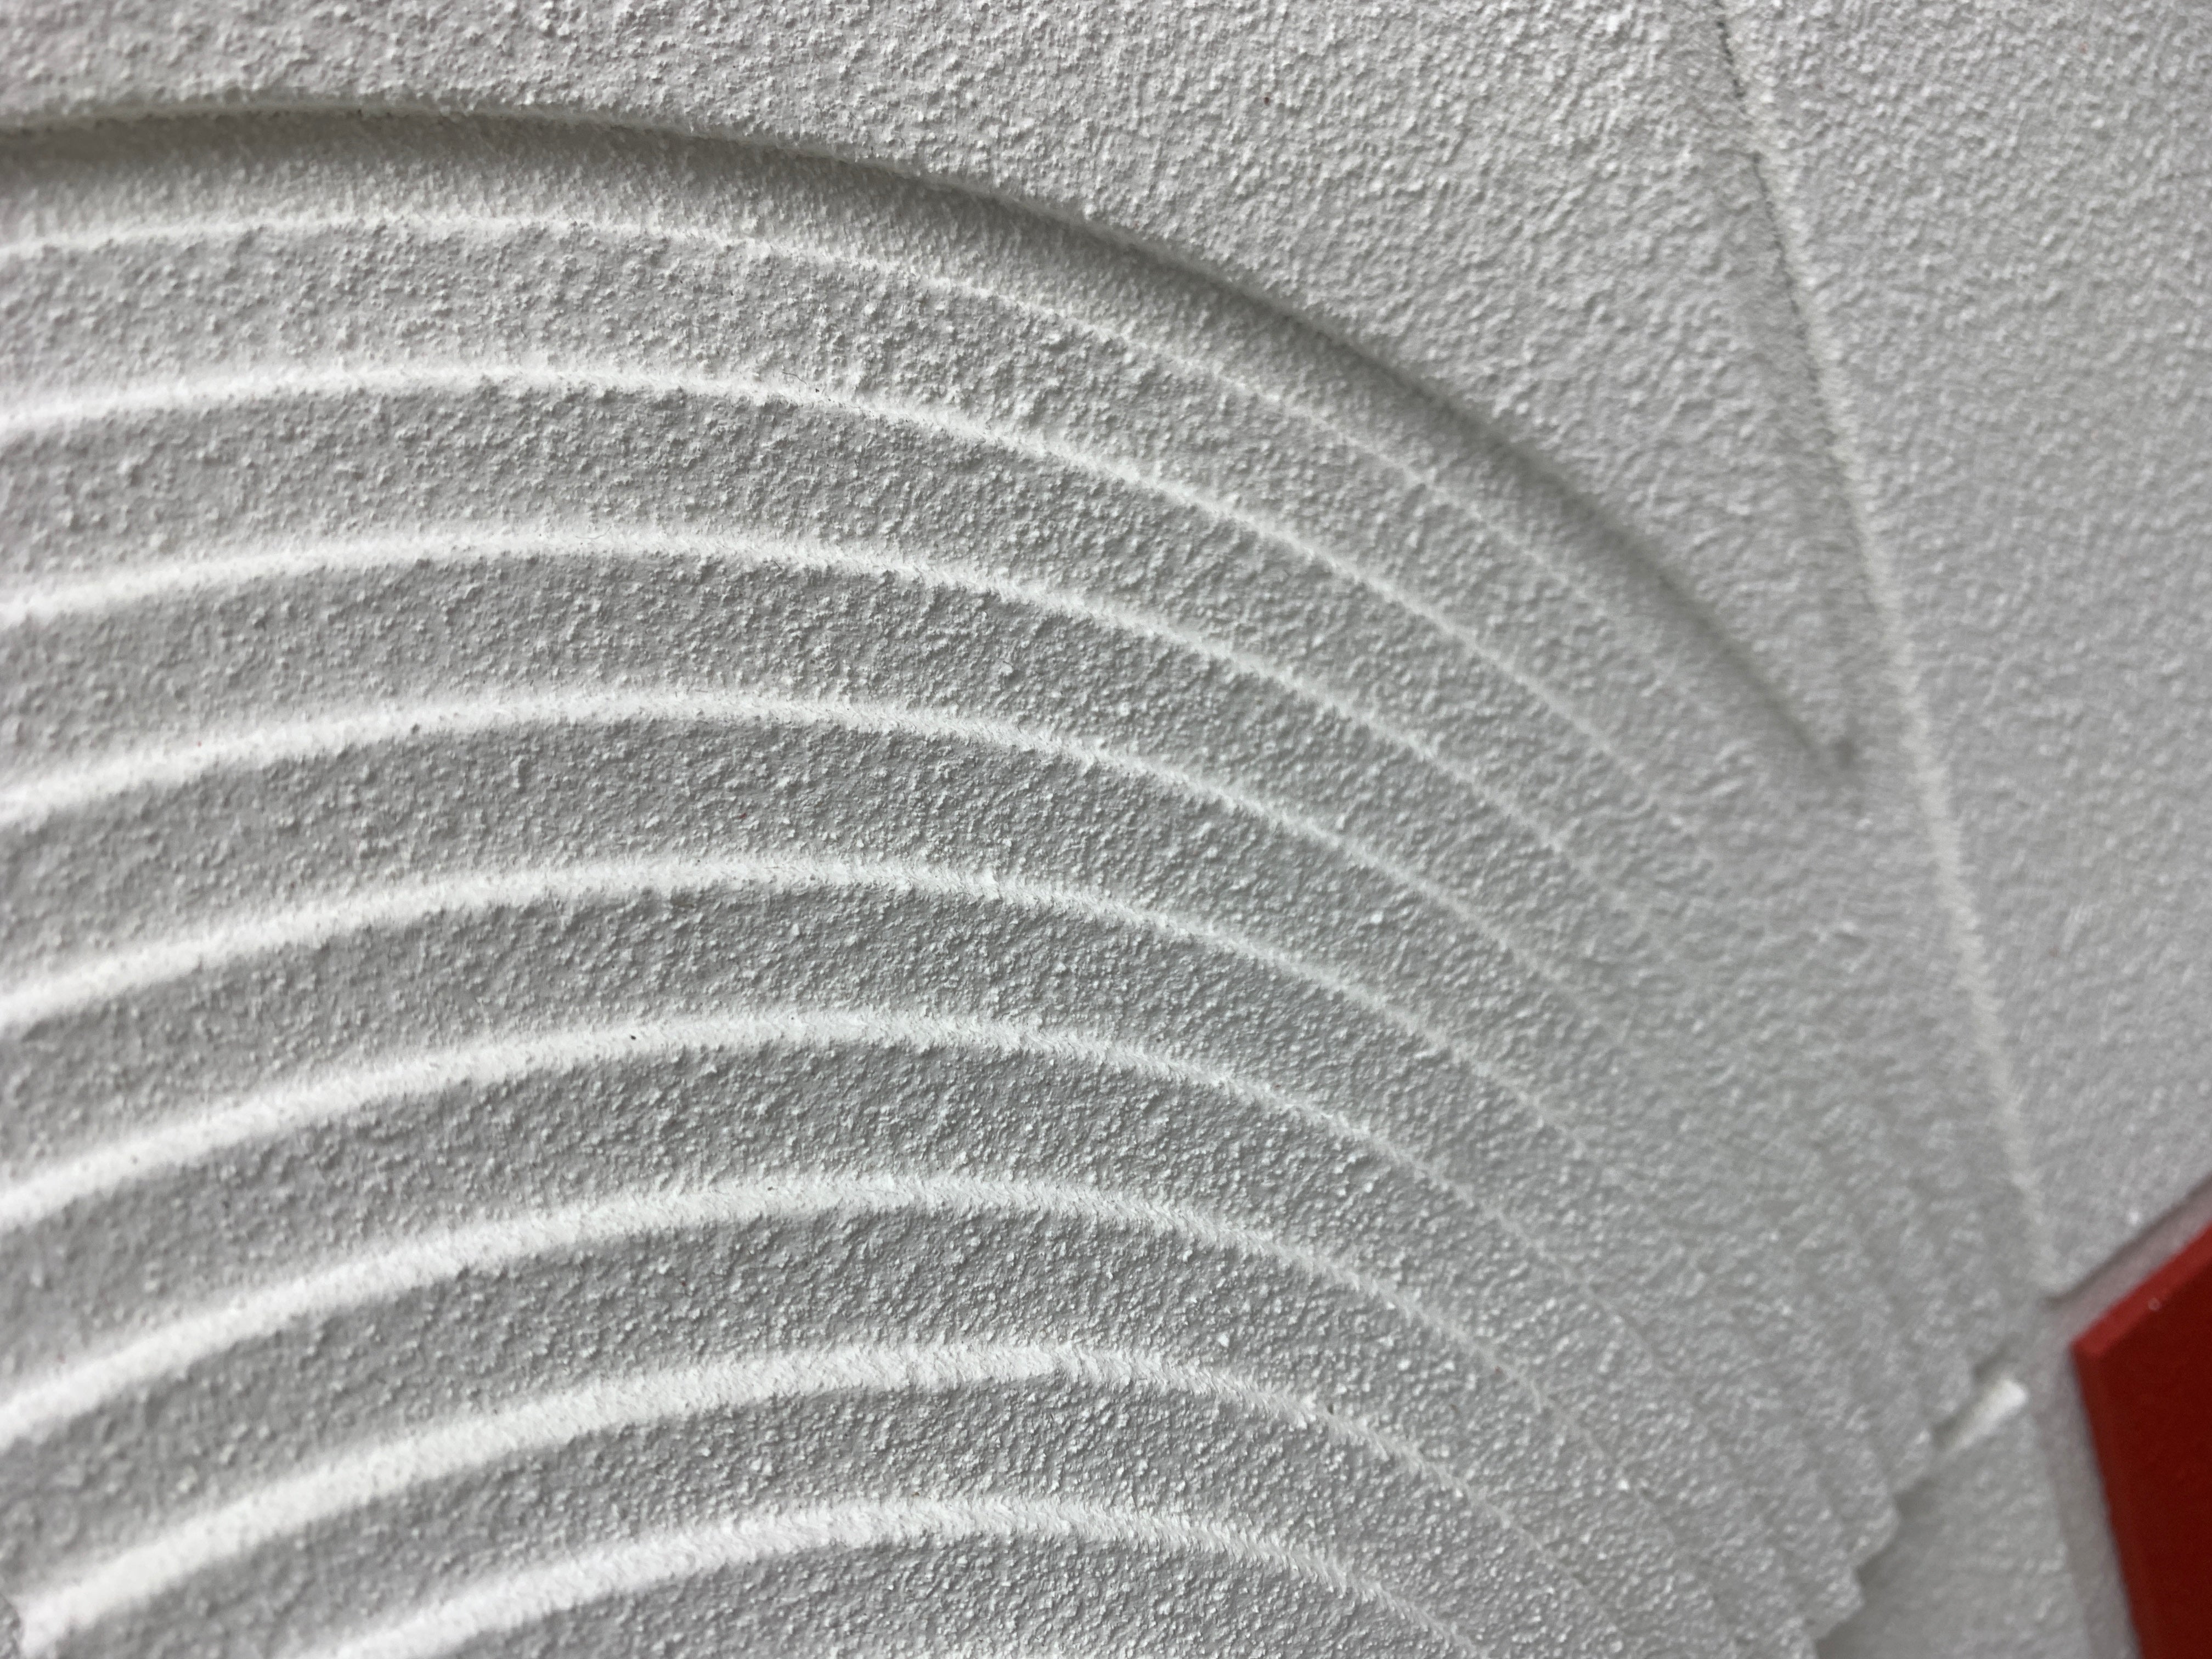 Monochrome Melange: Abstract Two-Tone Shapes Wall Art Interior Moderna   